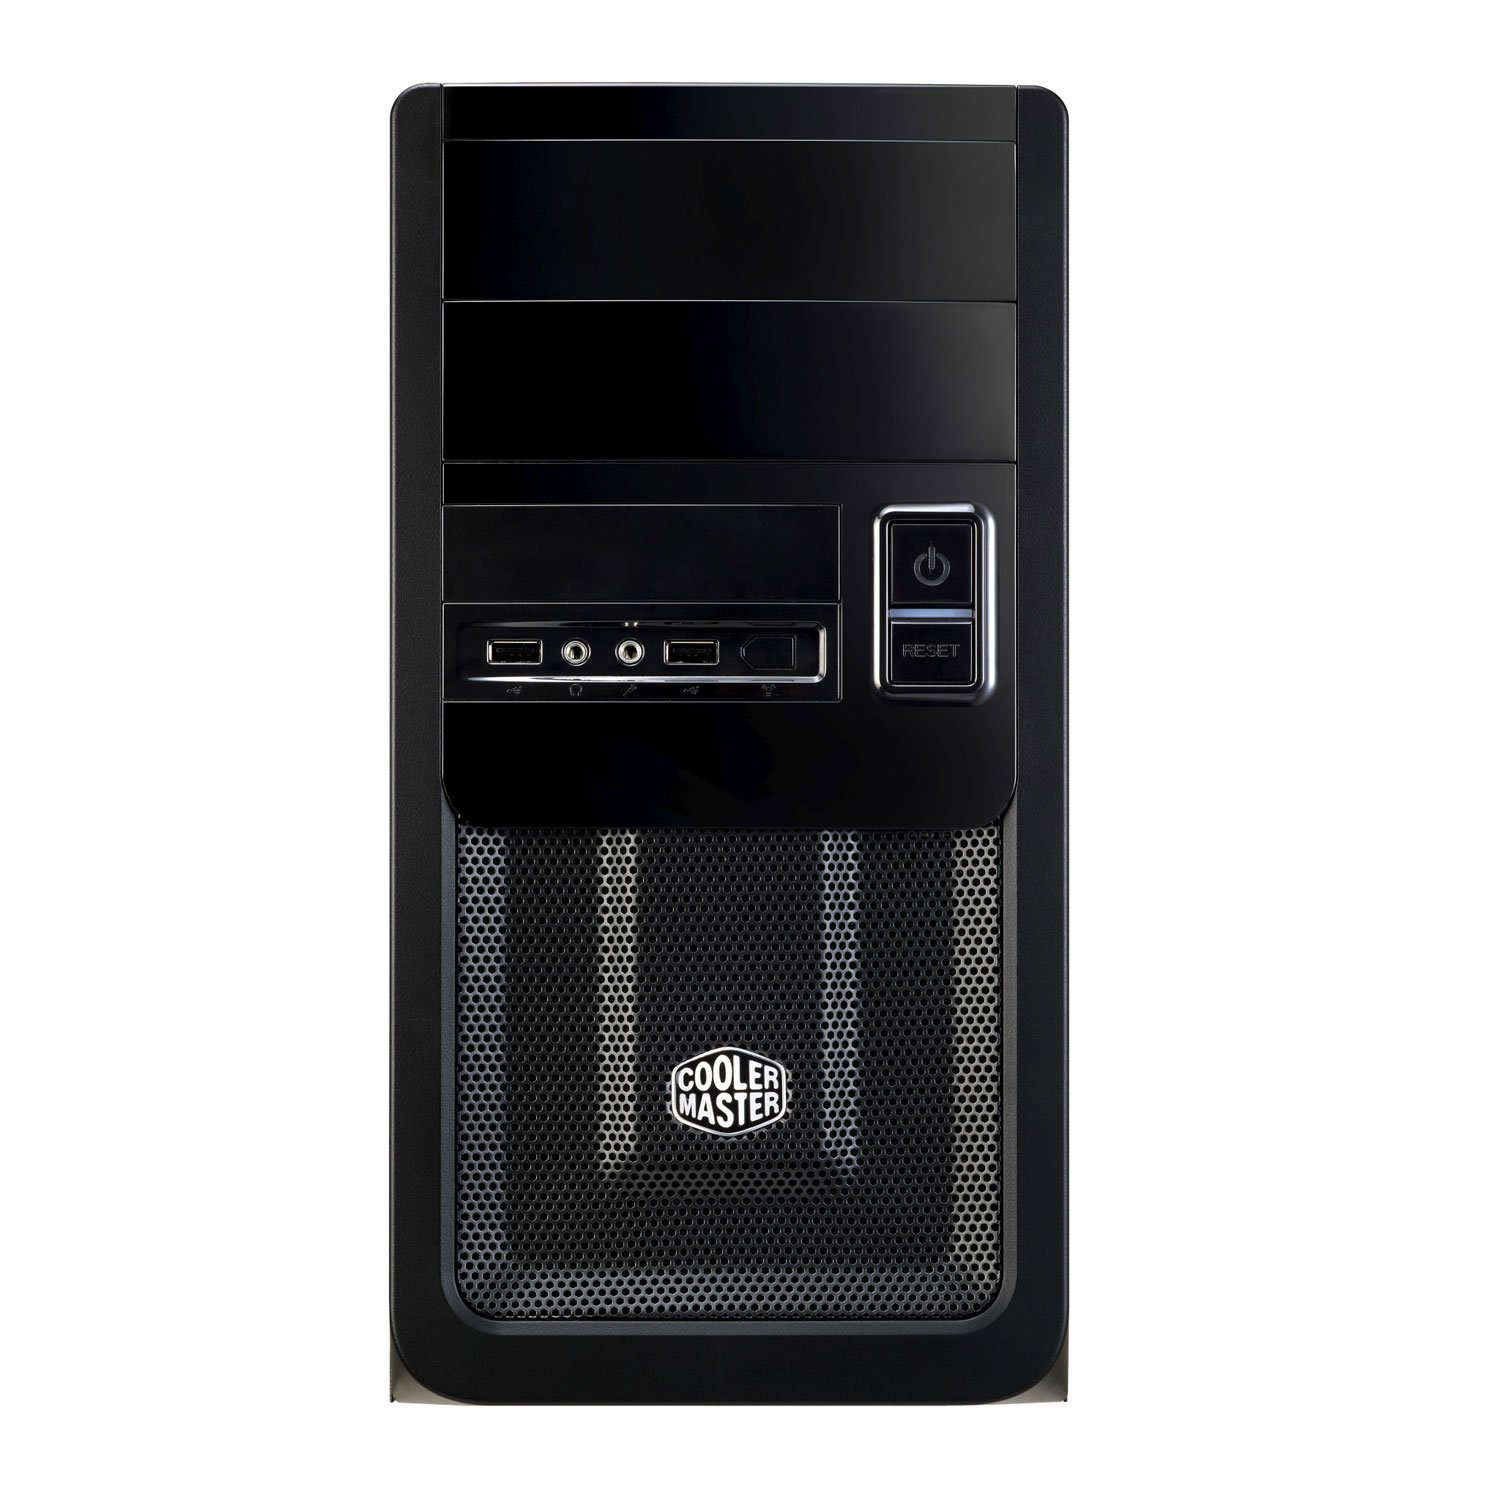 Cooler Master RC-343-KKN1 Elite Black PC Case